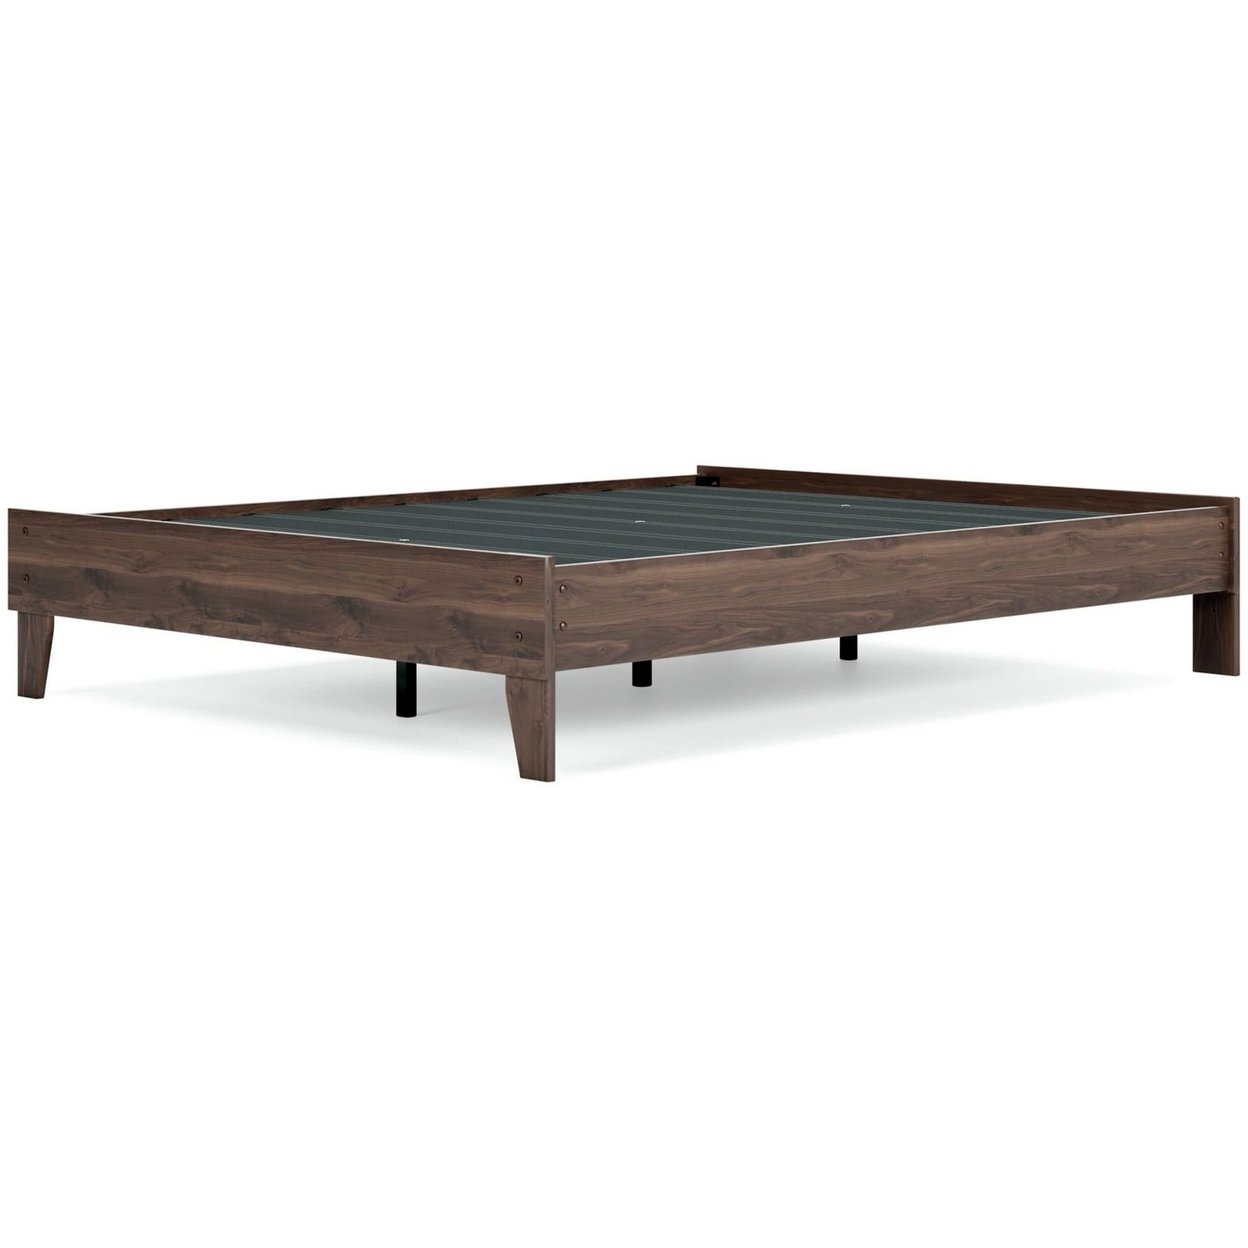 Sof Queen Size Platform Bed, Low Profile, Footboard, Dark Brown Finish- Saltoro Sherpi